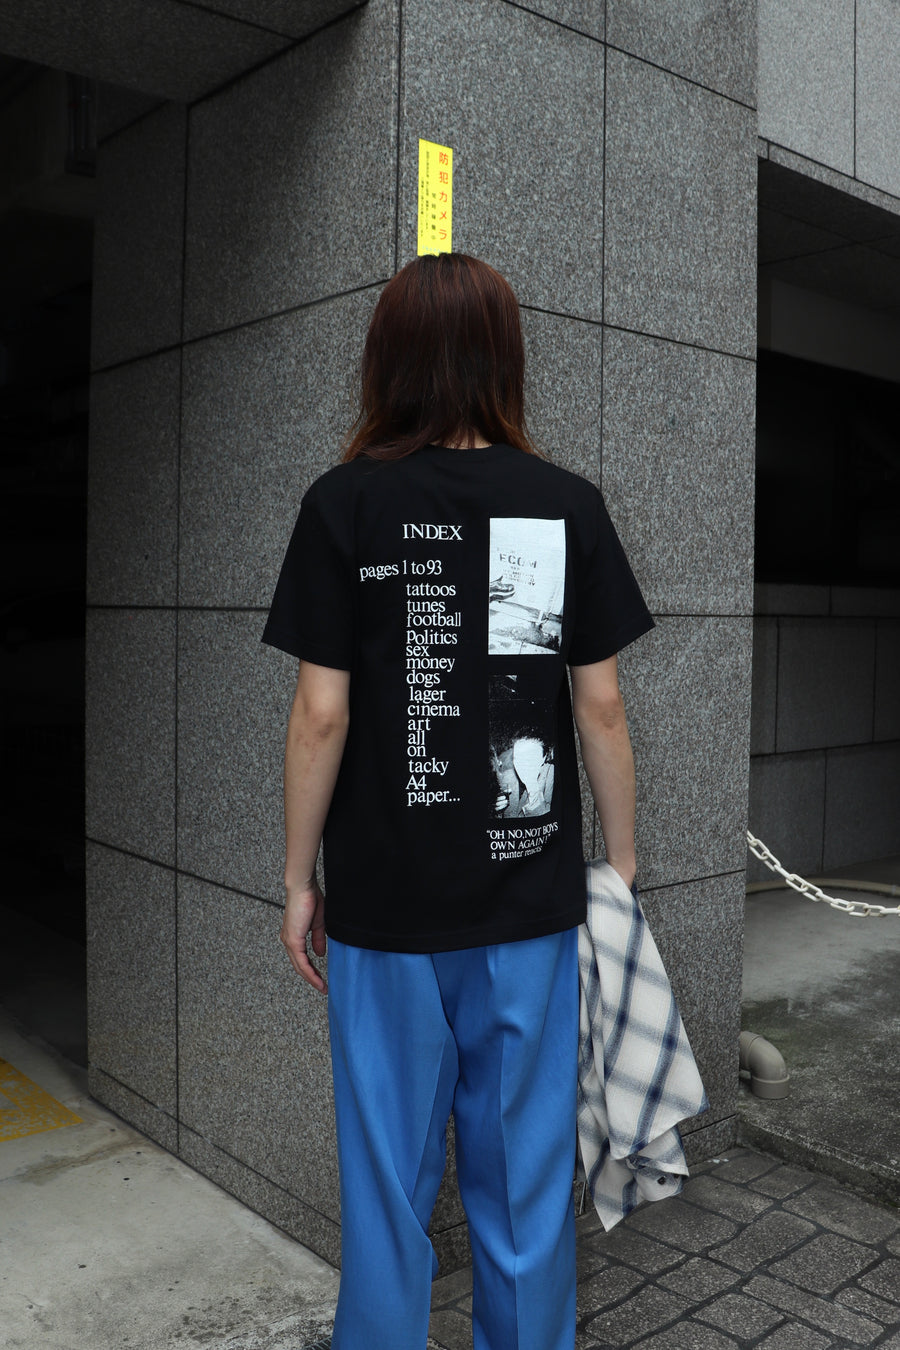 TOGA VIRILIS  Print T-shirt ISSUE ONE BOY'S OWN SP(BLACK)